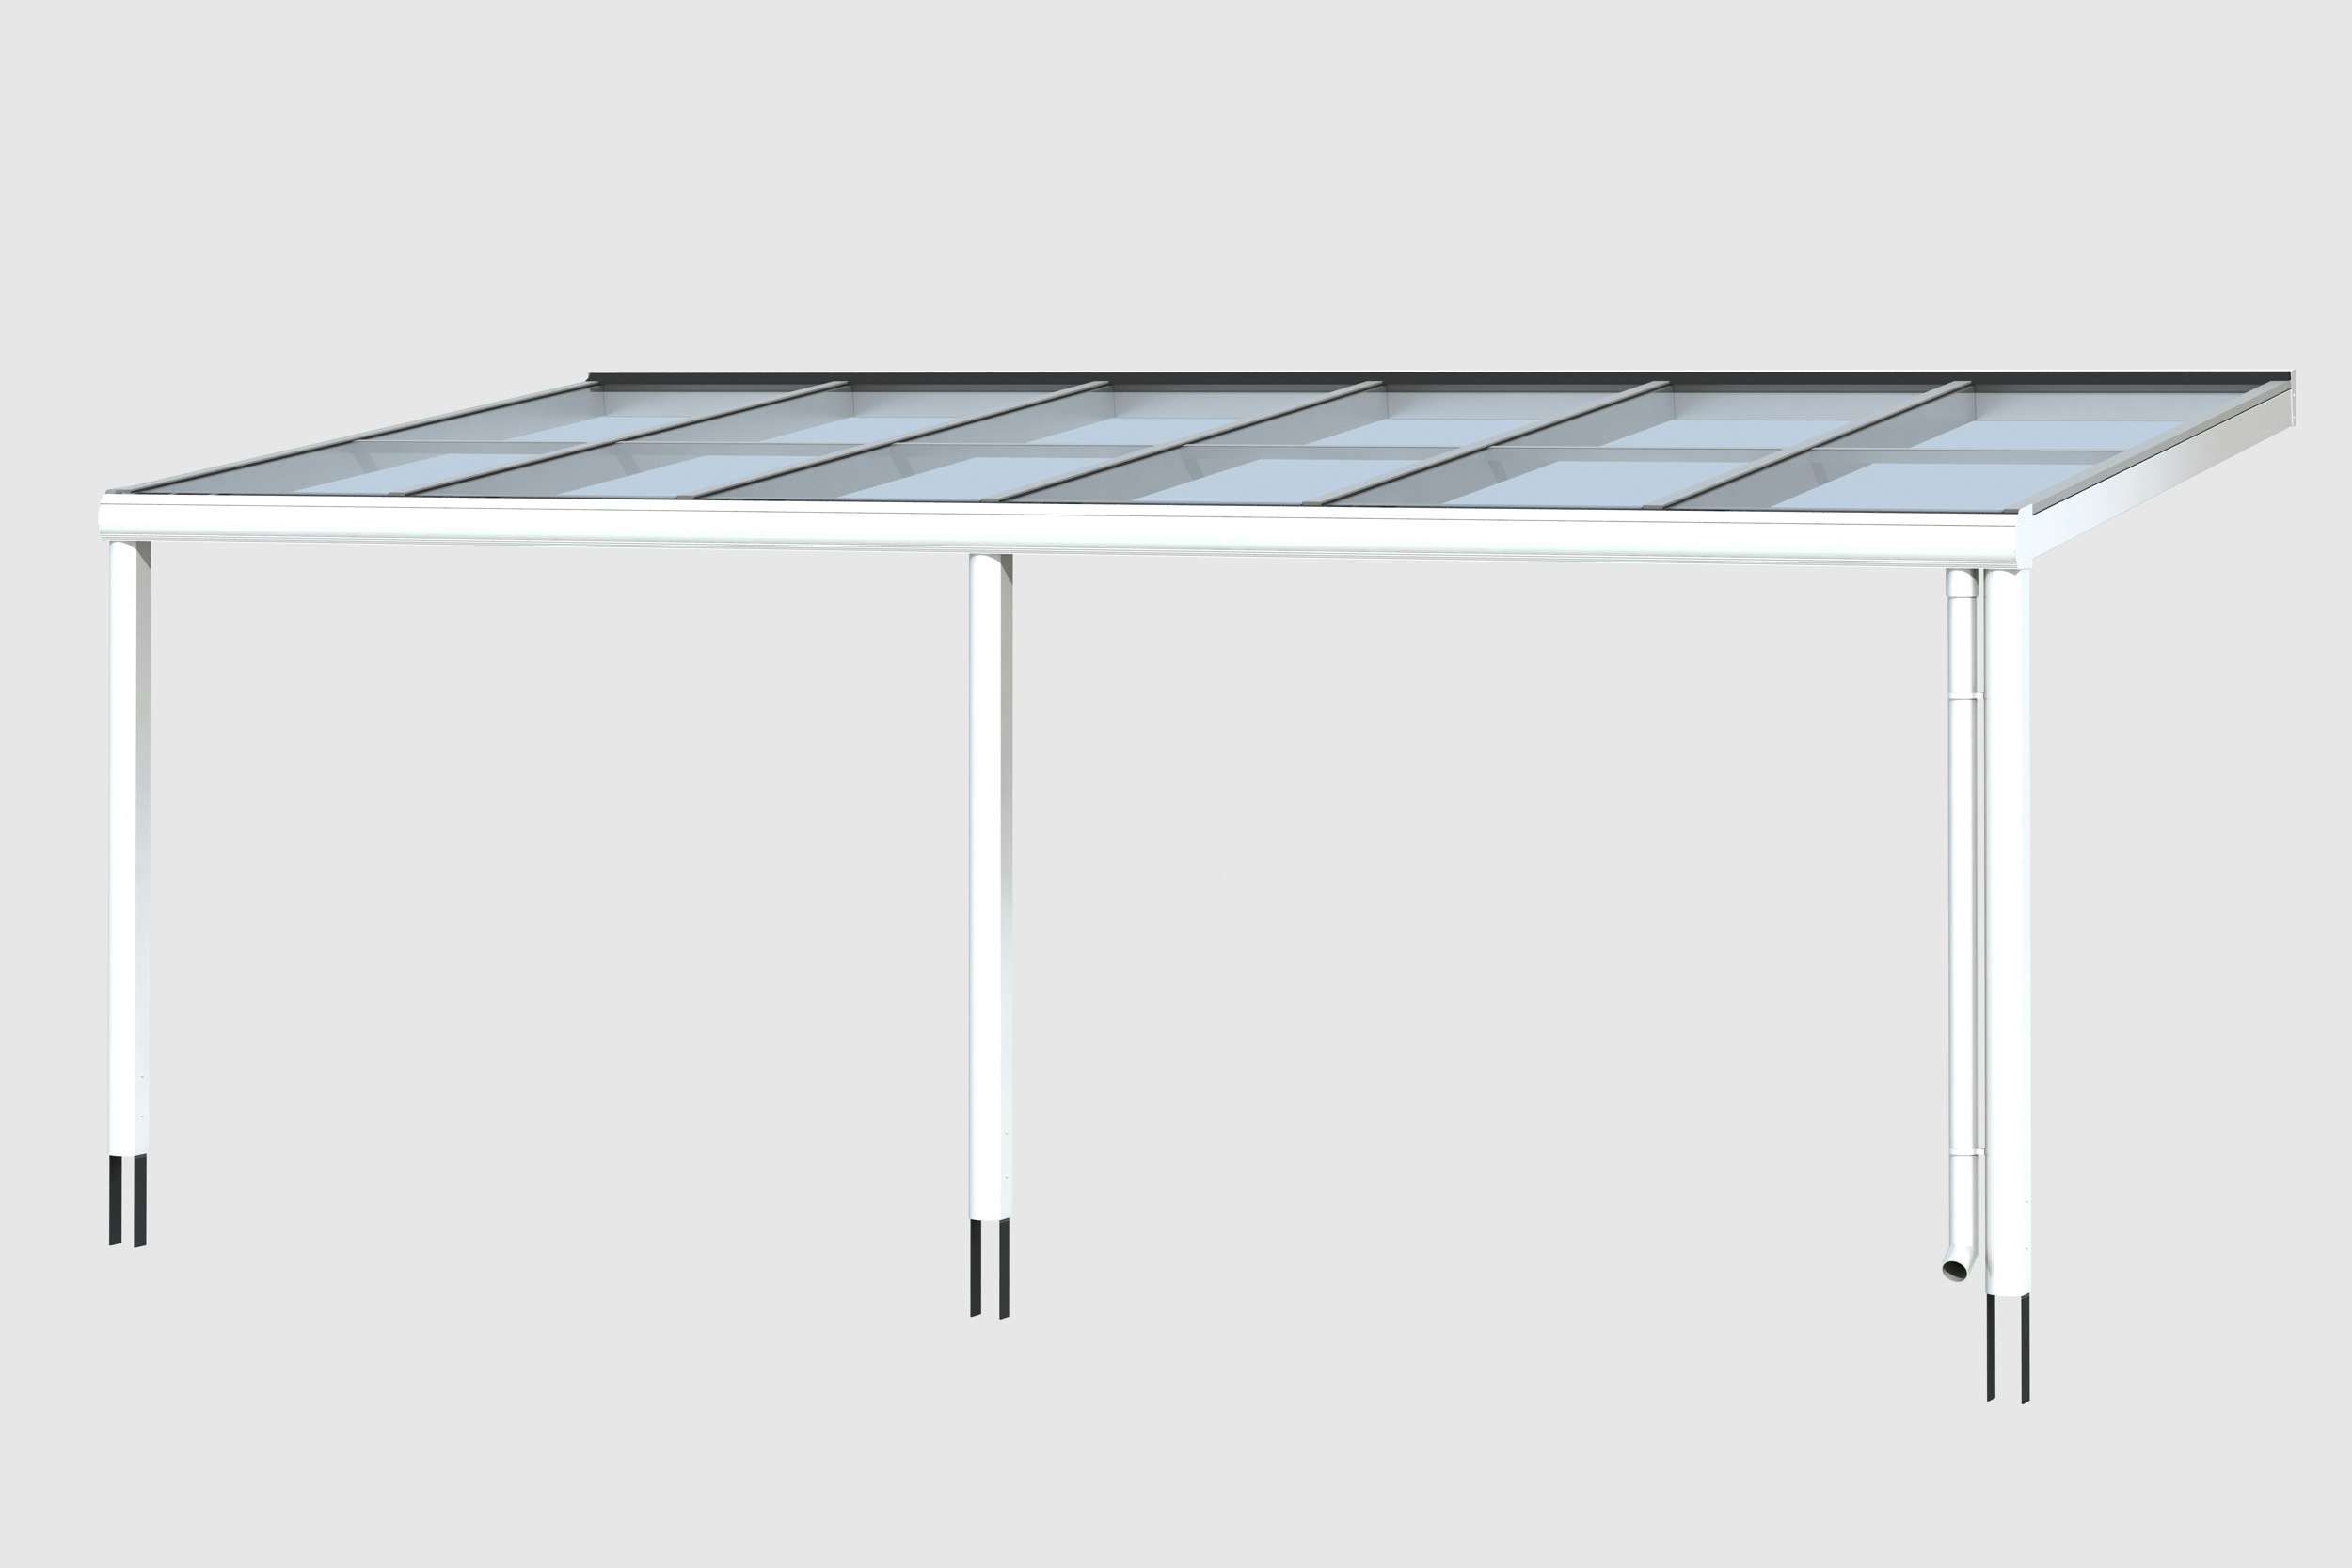 Skan Holz Aluminium Terrassenüberdachung Monza Breite 648 cm